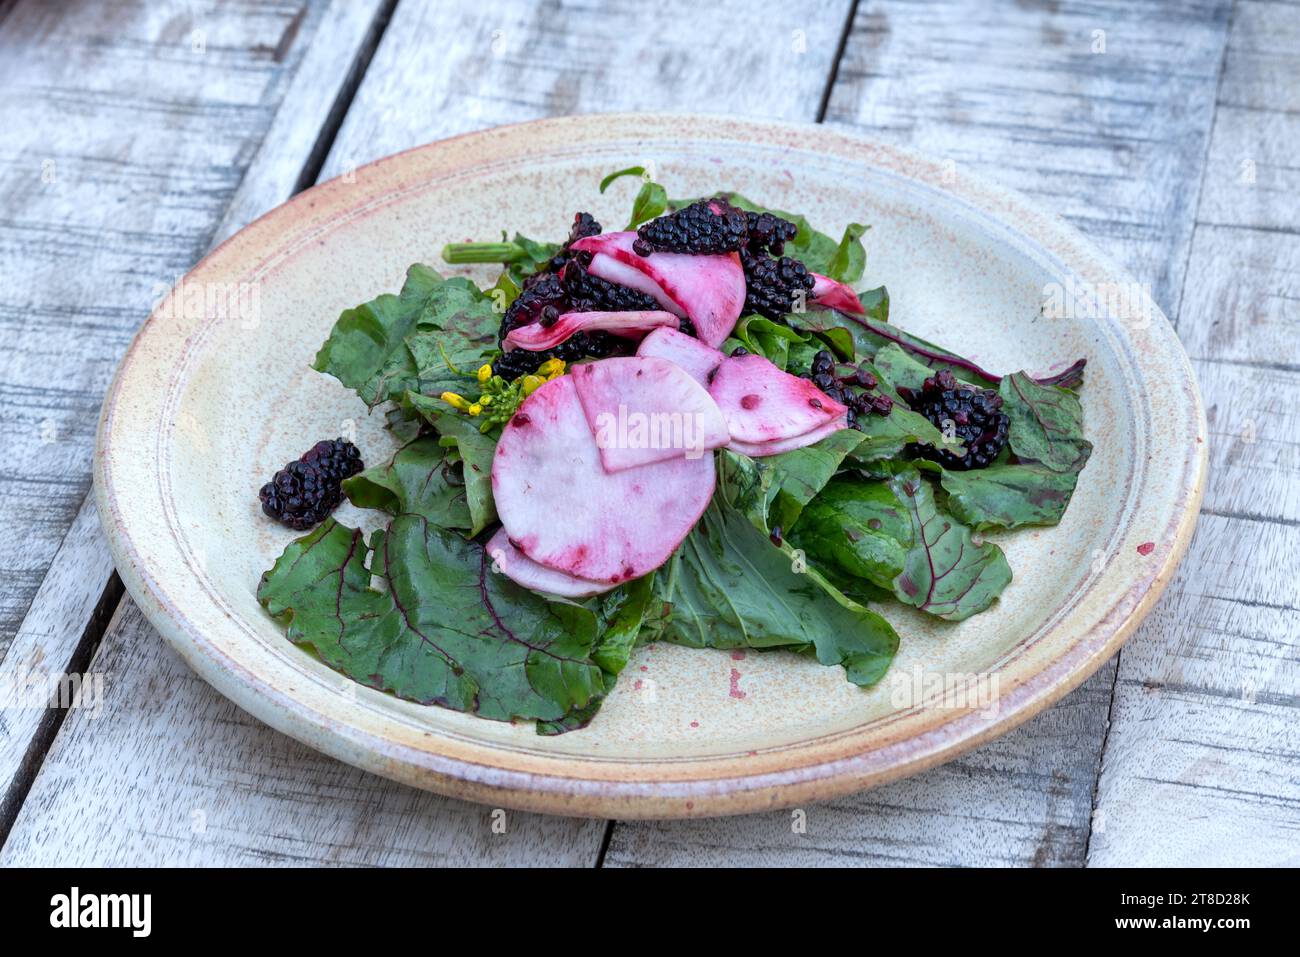 Beet green, turnip and blackberry salad at the Minam River Lodge, Oregon. Stock Photo